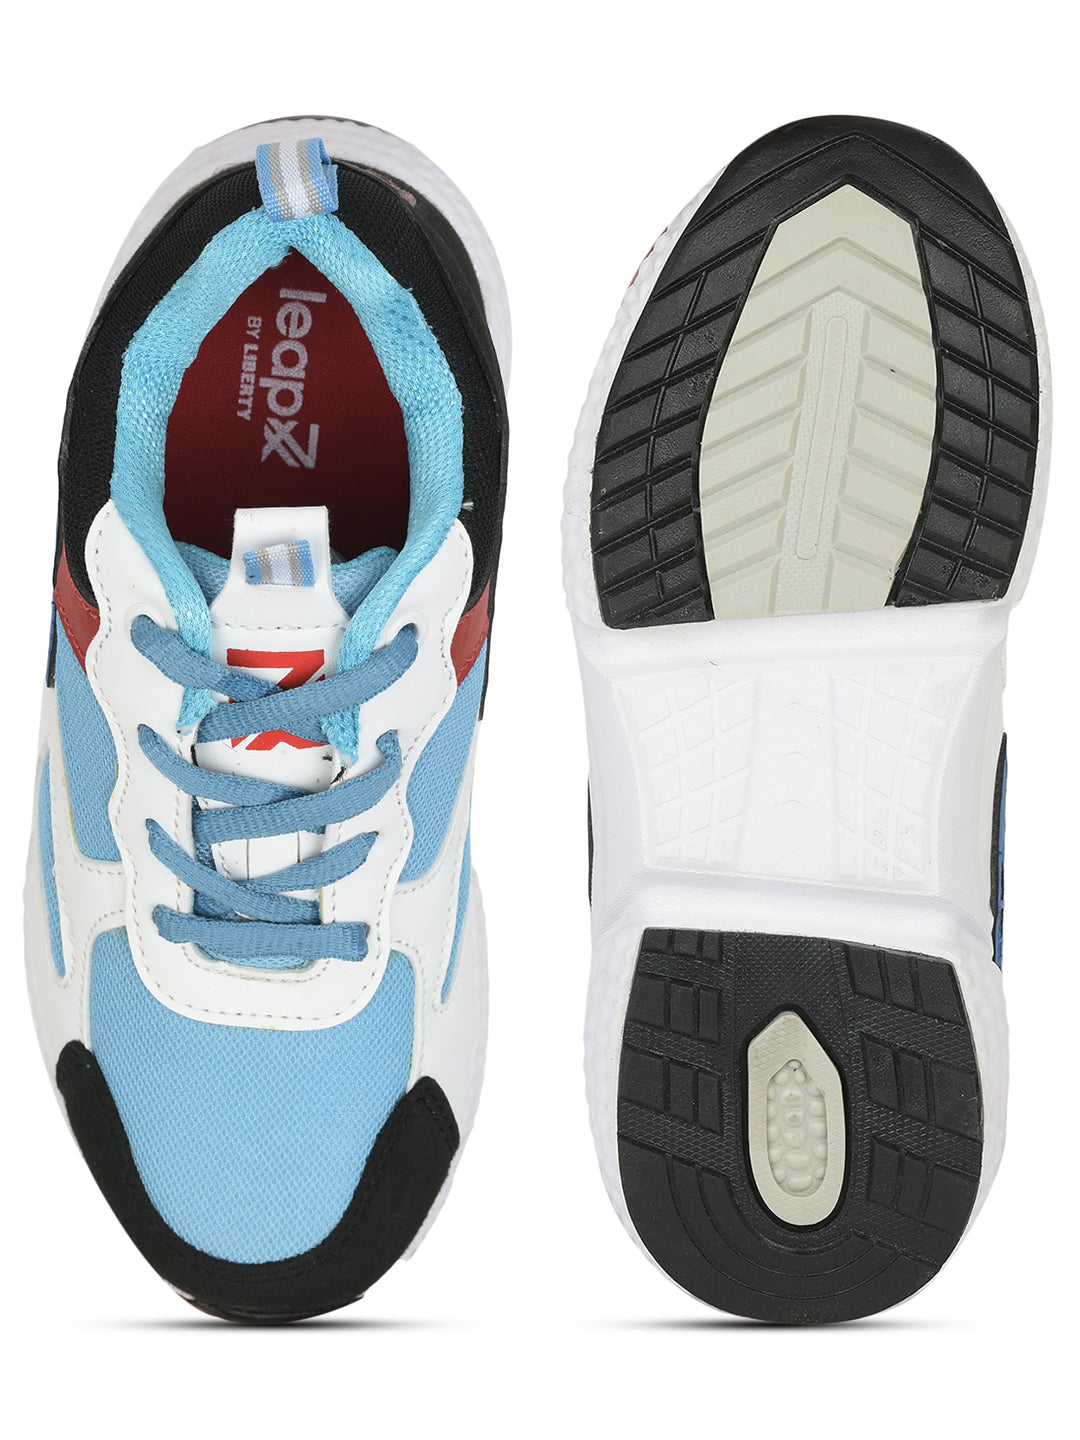 Footwear, Girls Footwear, Boys Footwear, Aqua Sneakers